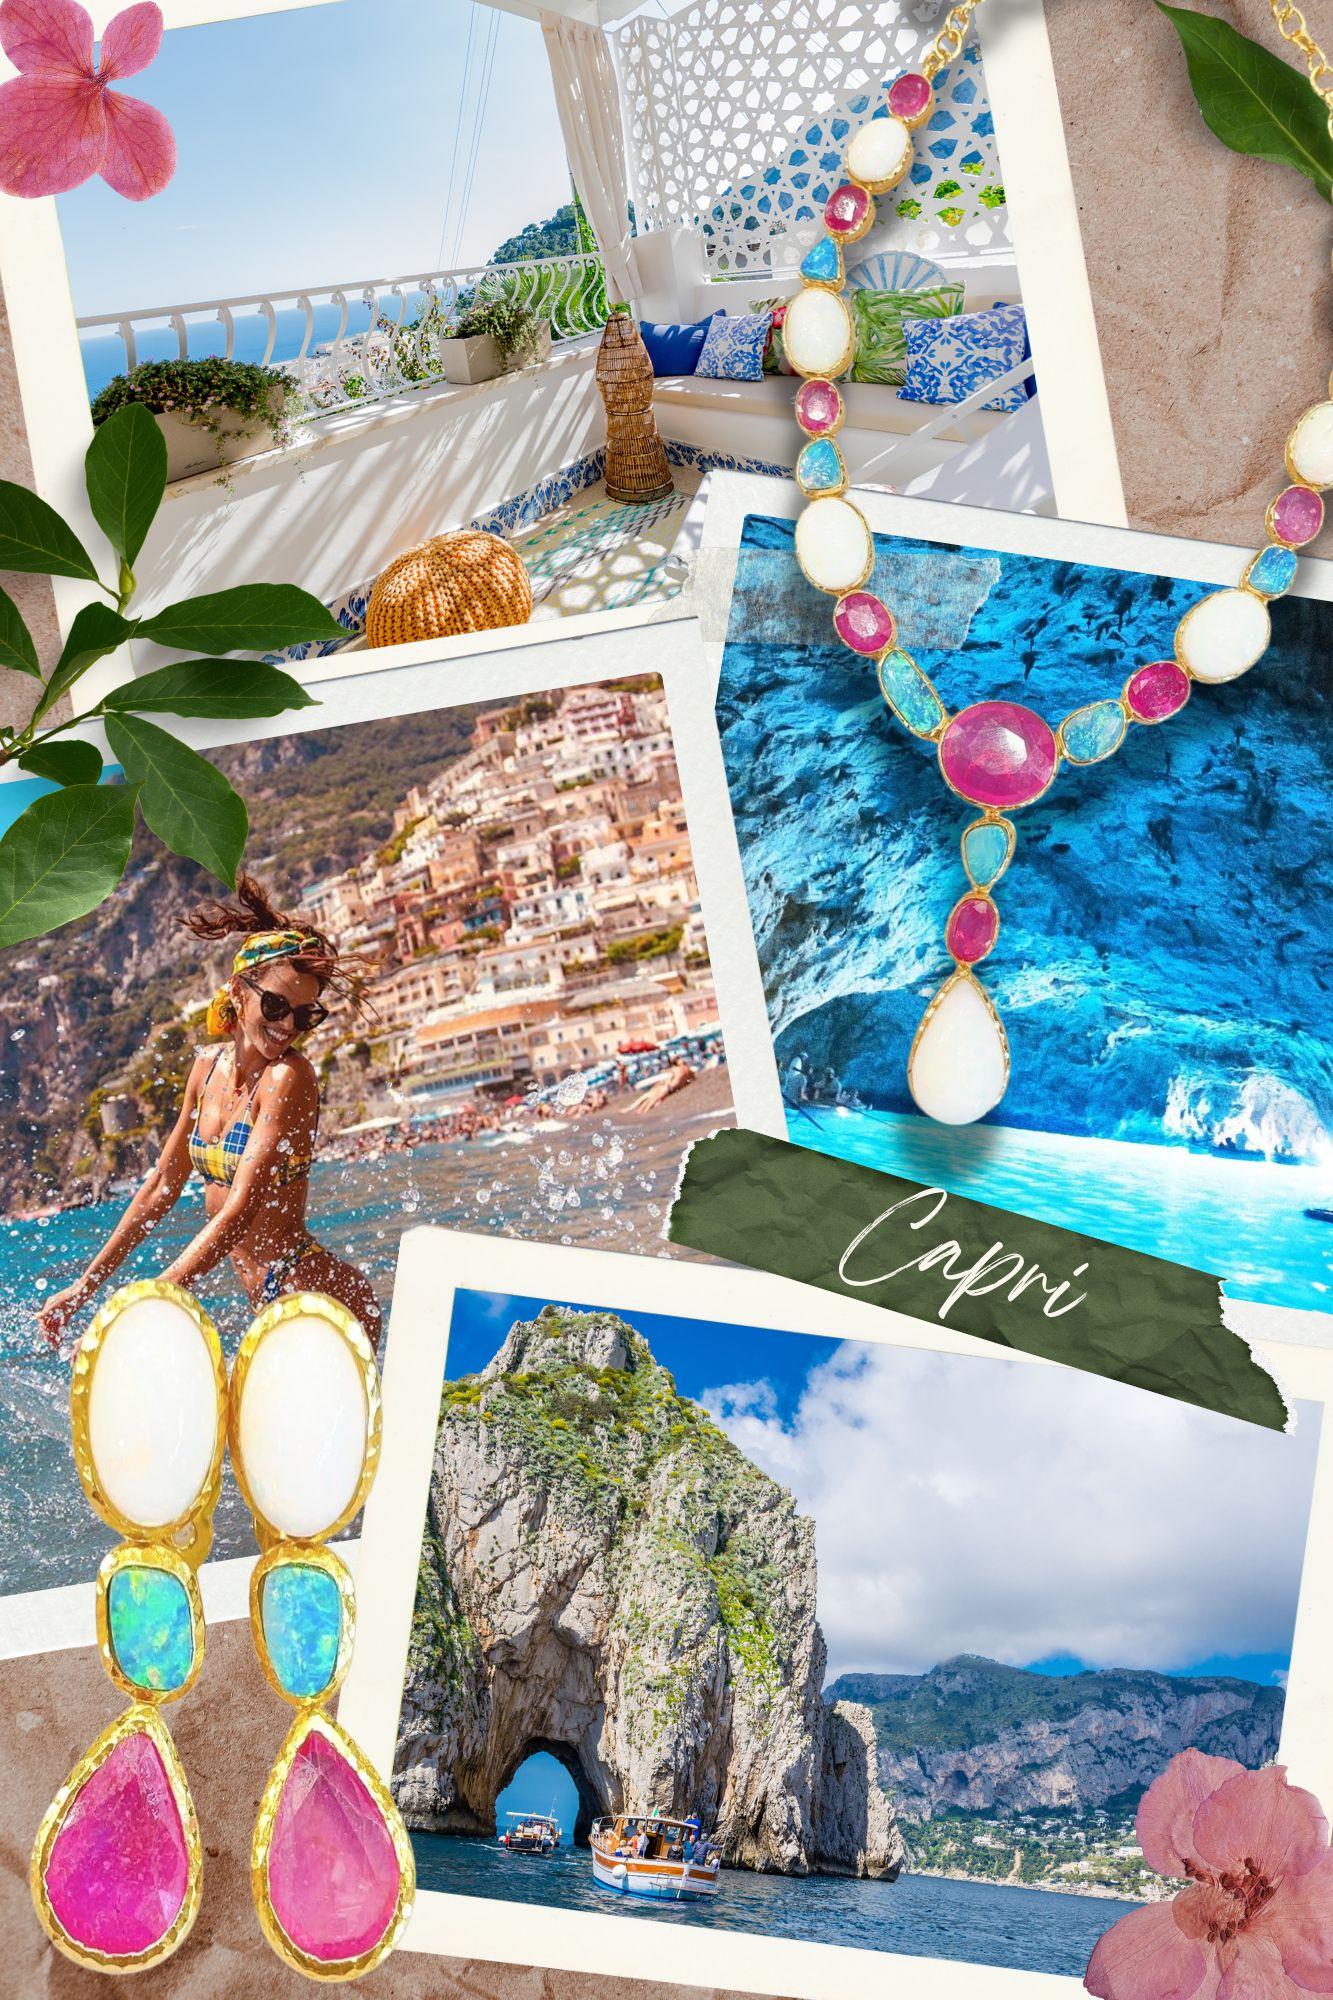 Brilliant Cut Bochic “Capri” South Sea Pearl & Multi Gem Earrings Set in 22k Gold & Silver For Sale